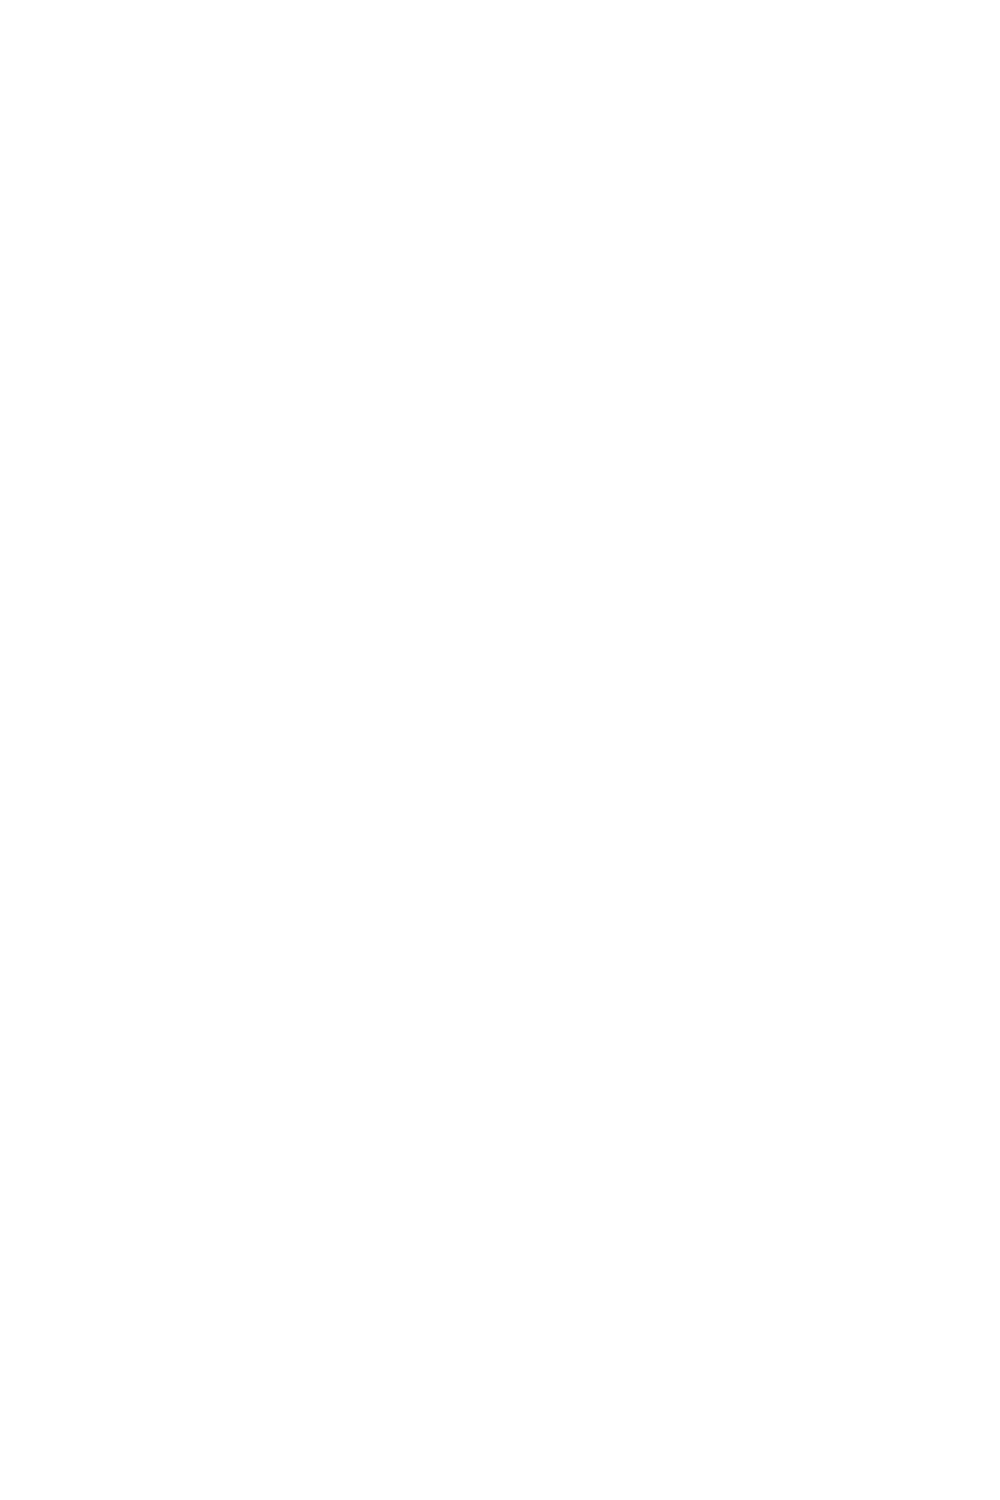 Danielle Levitt mens fashion photography celebrity portrait of MOONLIGHT actor Ashton Sanders leaning against grand piano in lavish home living room for Boys By Girls Magazine editorial